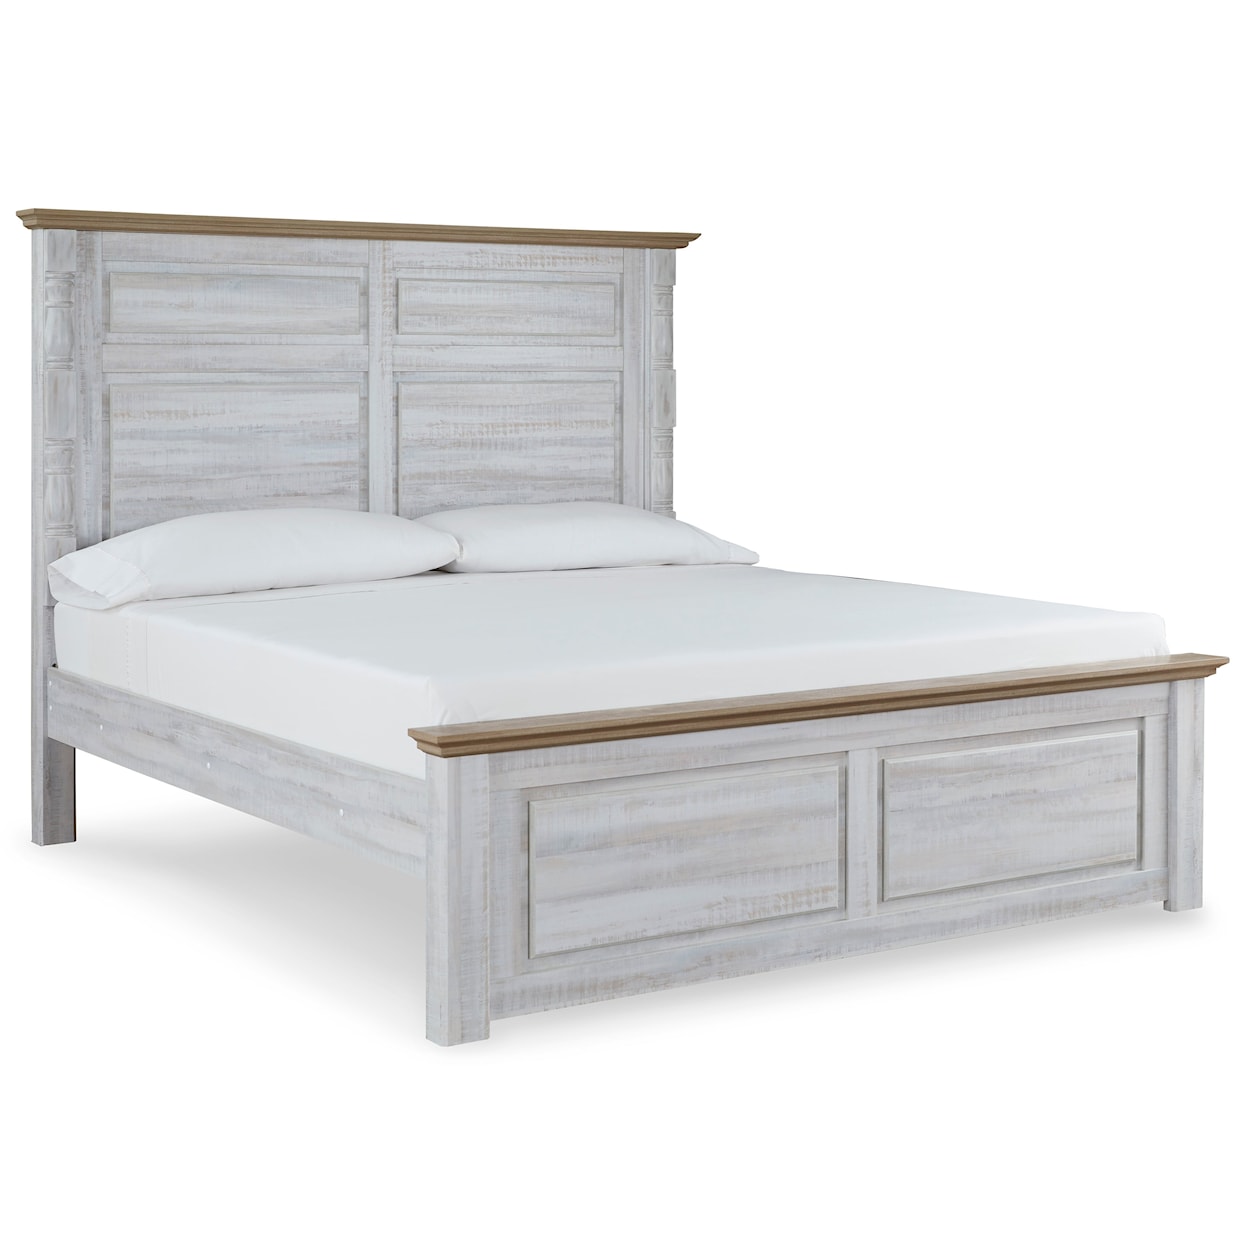 Ashley Furniture Signature Design Haven Bay King Panel Bed